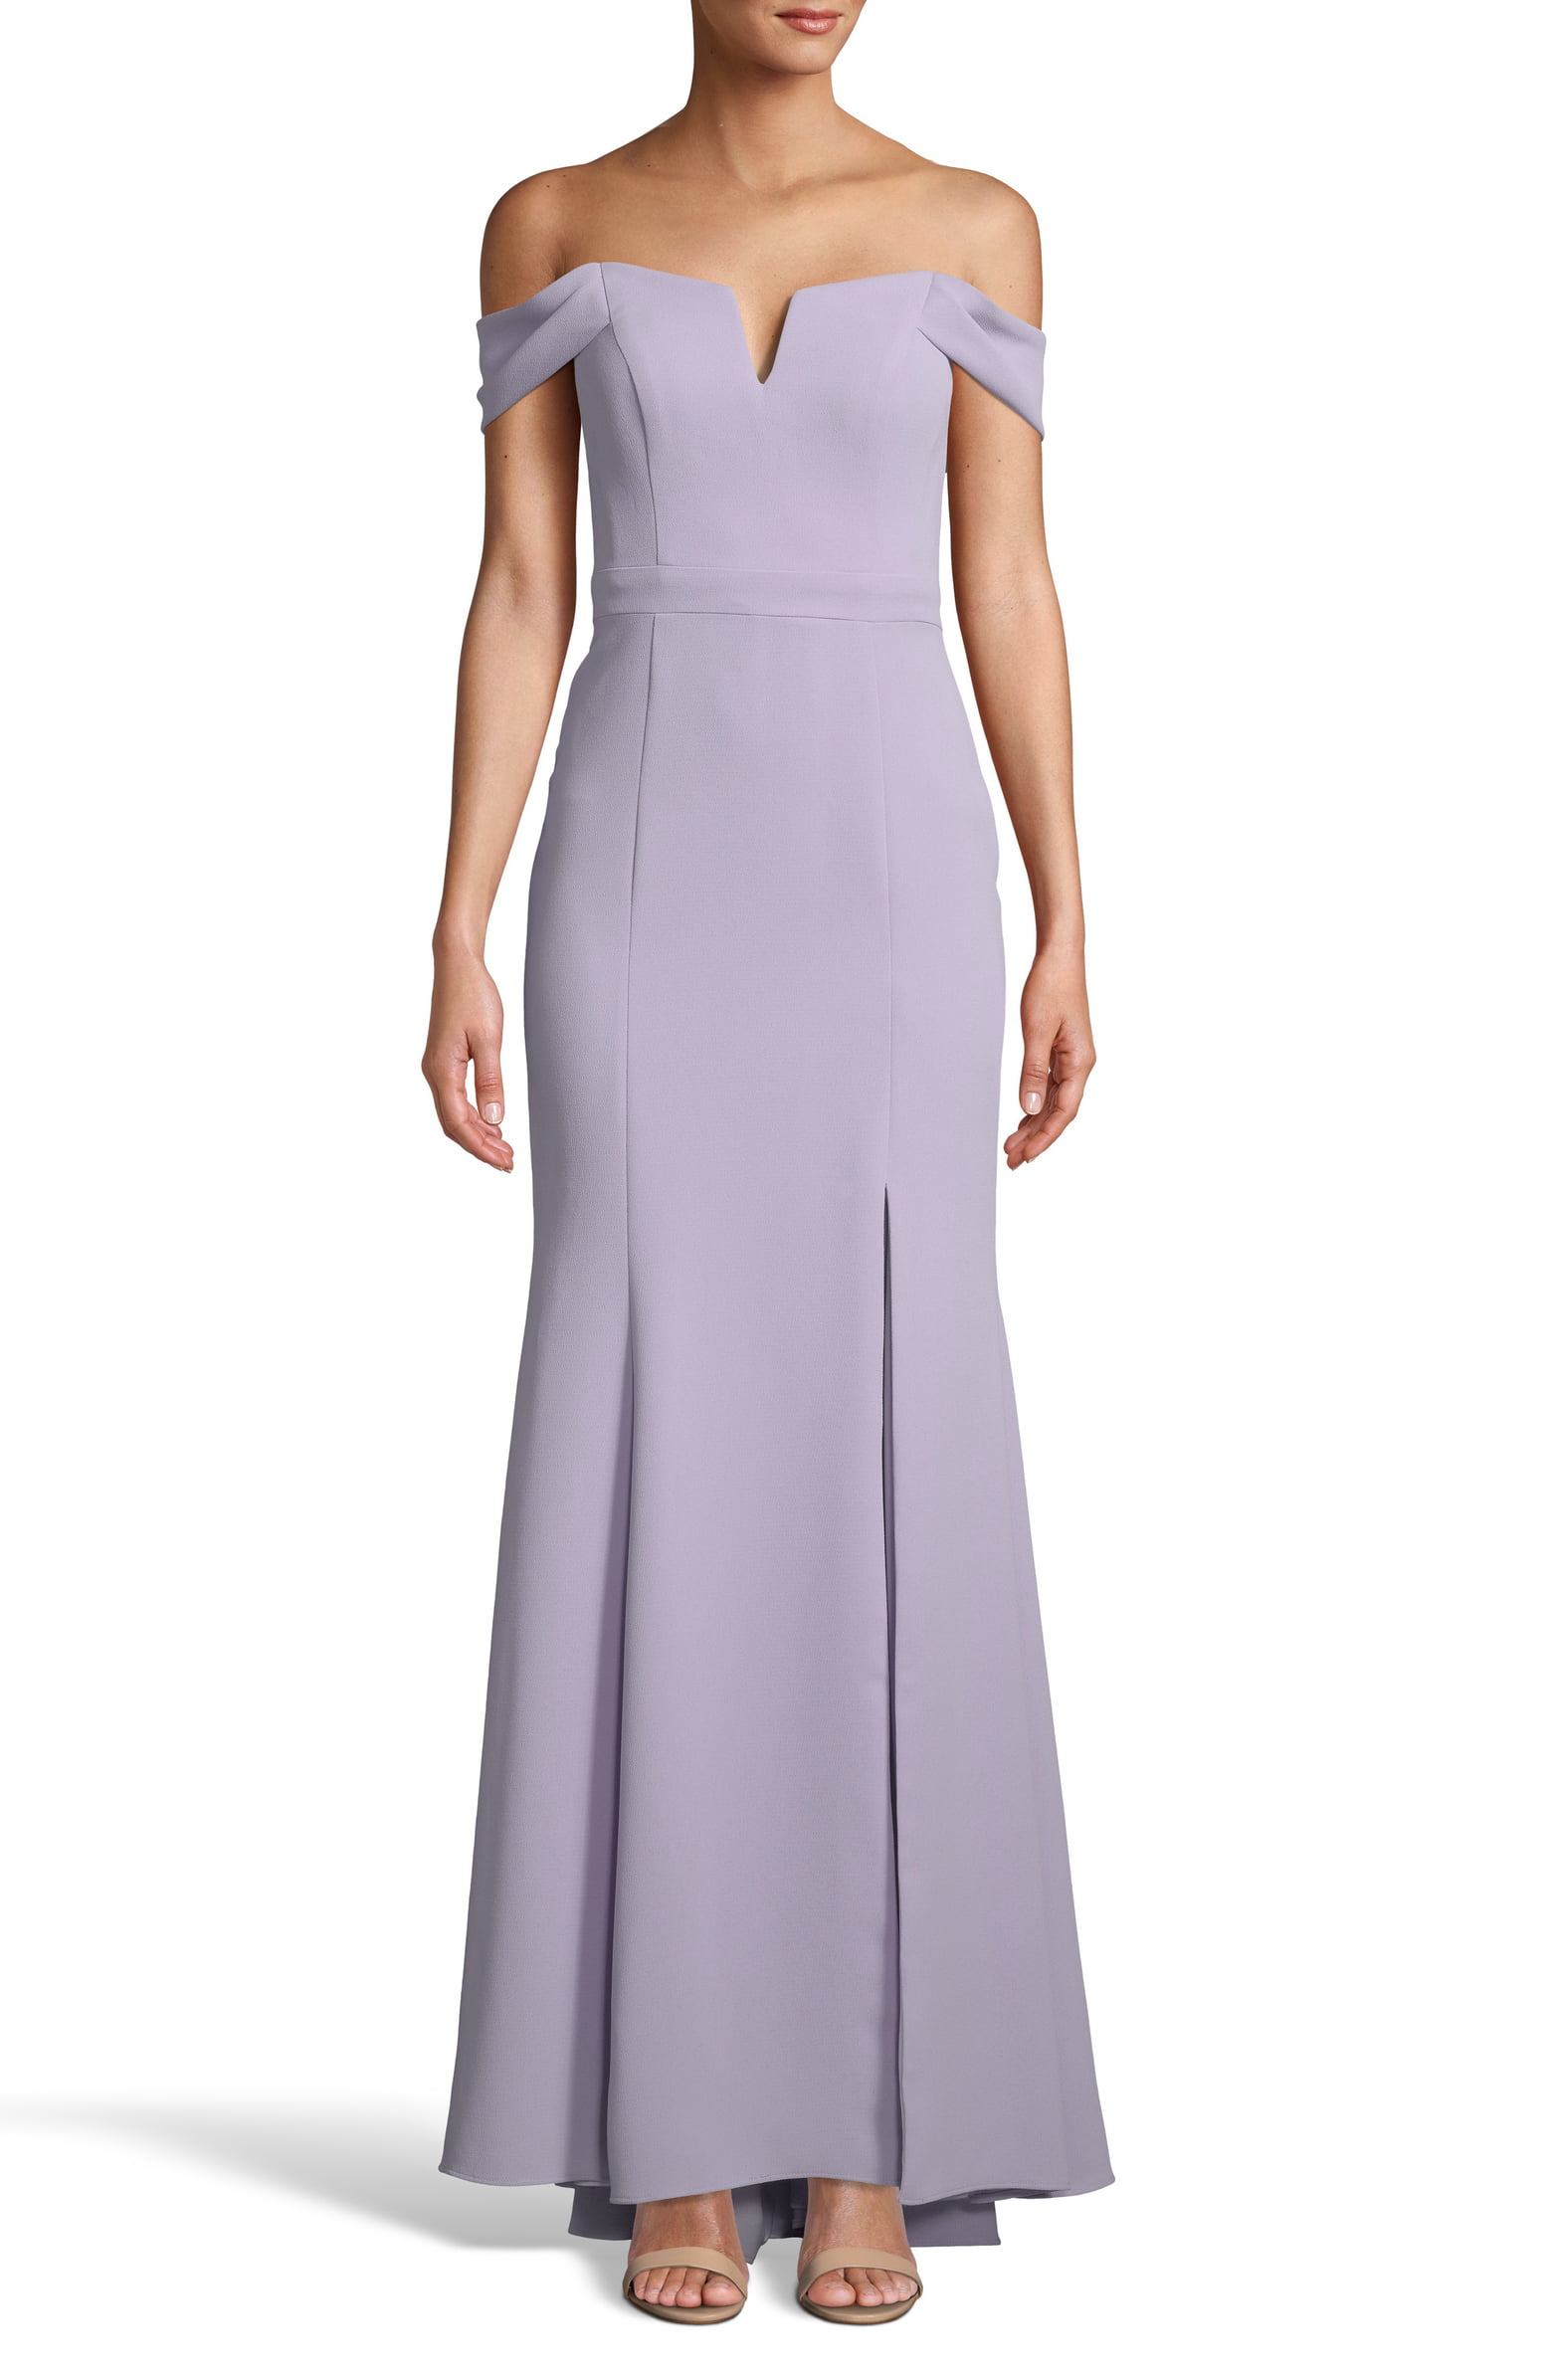 21 Lavender Wedding Dresses That Are ...